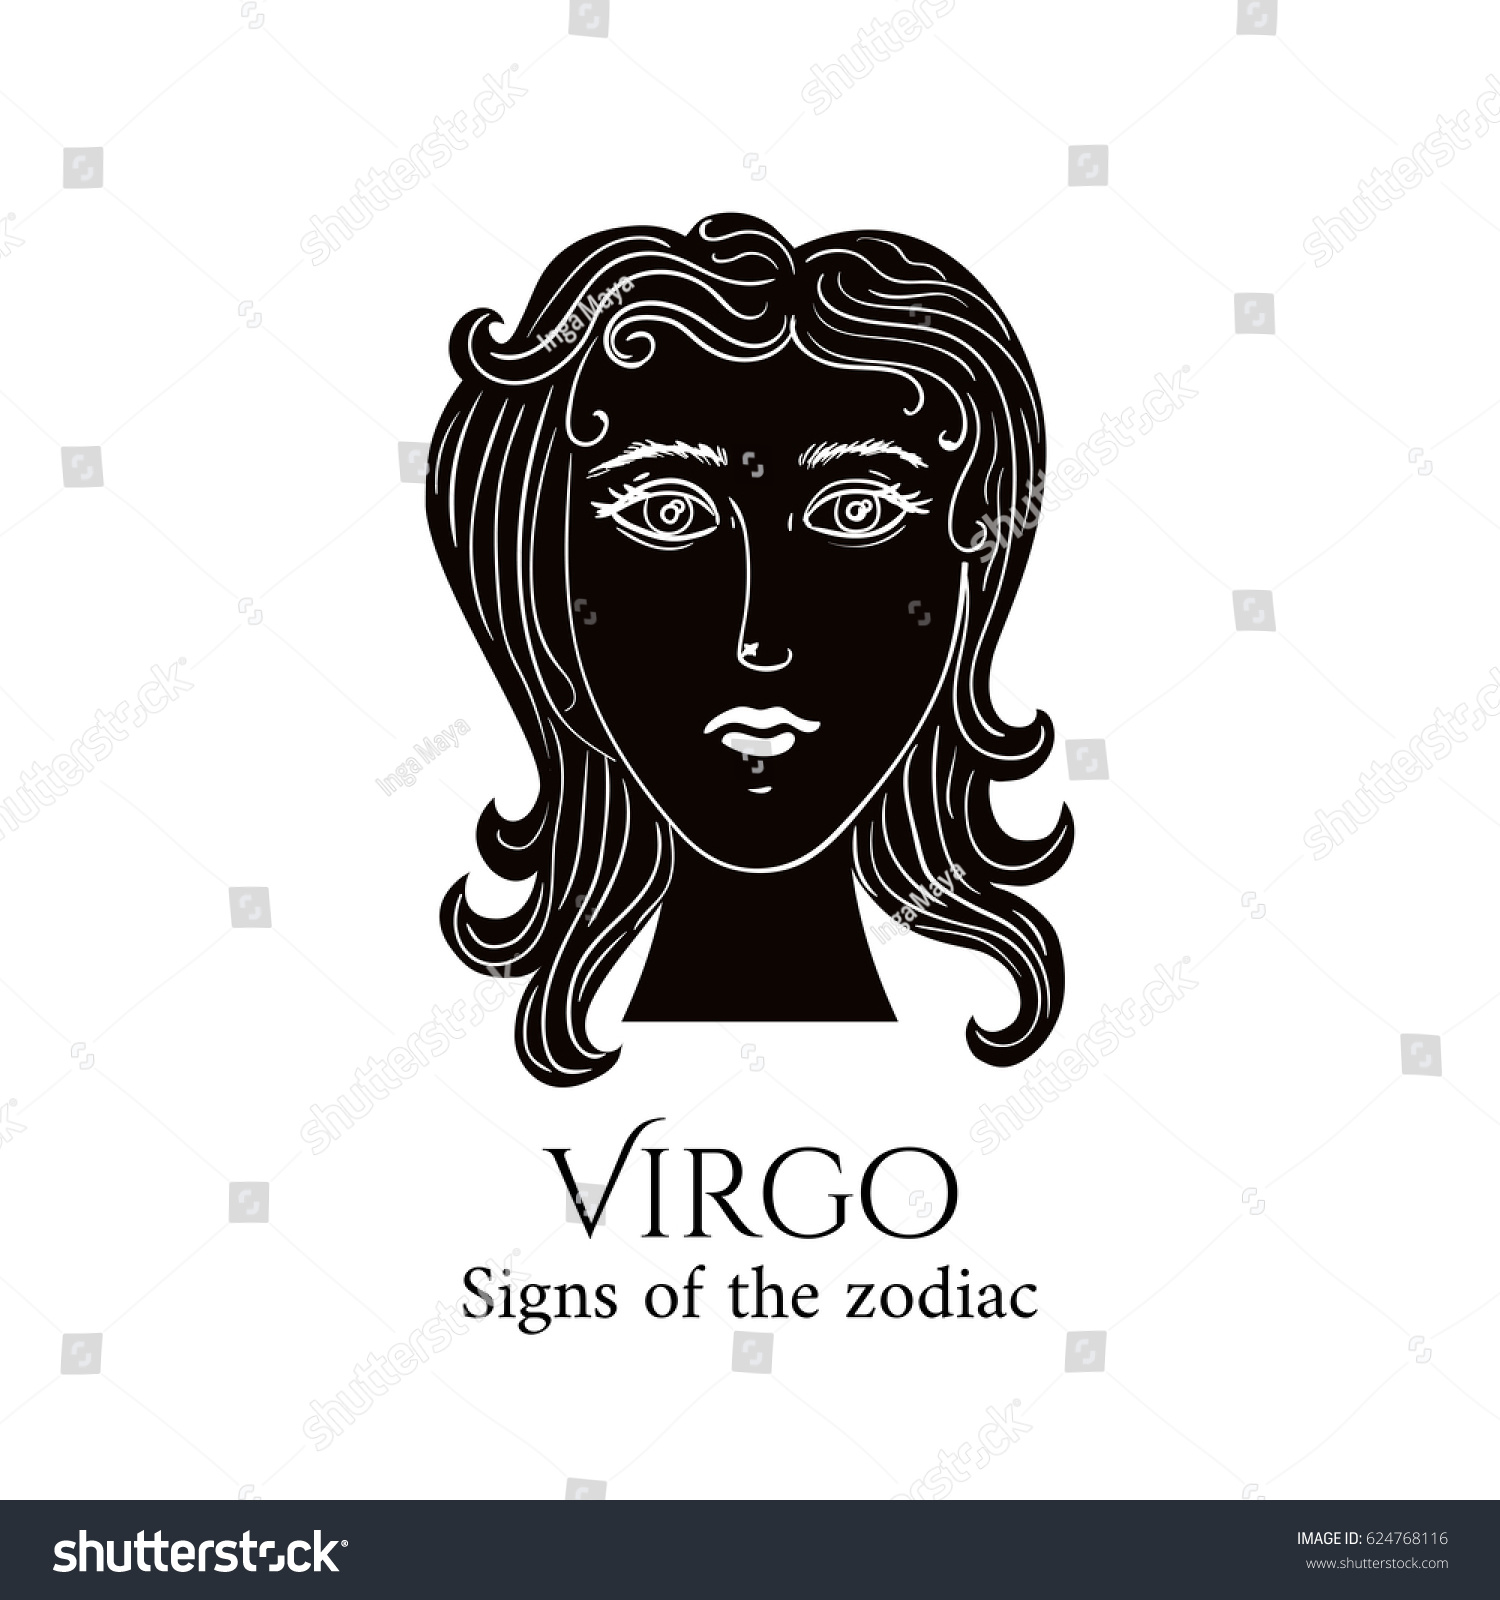 Signs Zodiac Virgo Hand Draw Black Stock Illustration 624768116